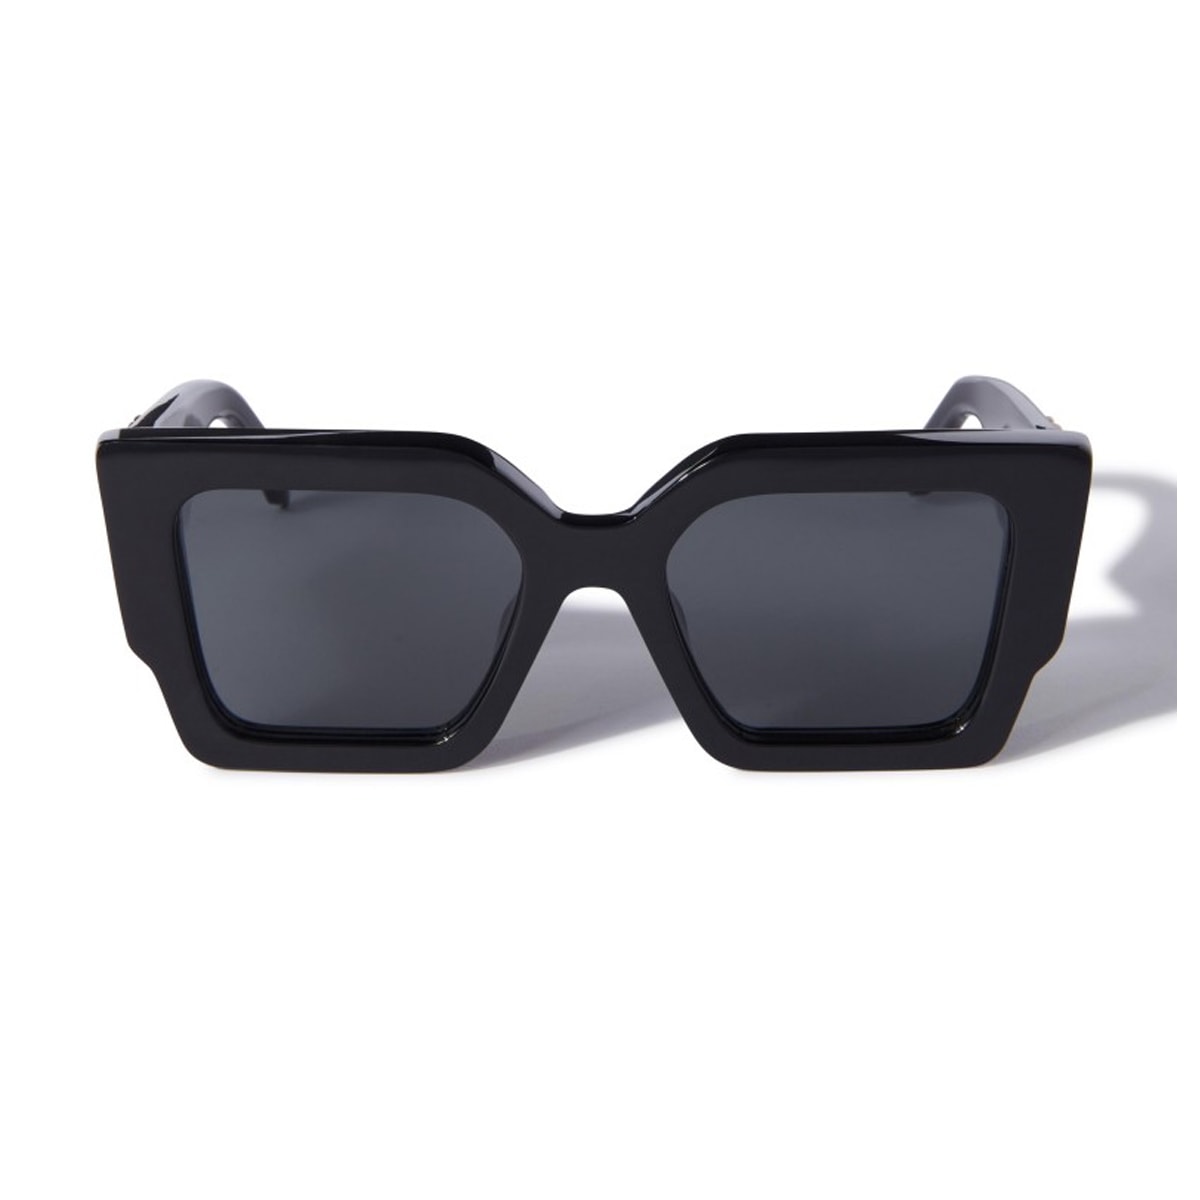 Oeri128 Catalina 1007 Black Sunglasses